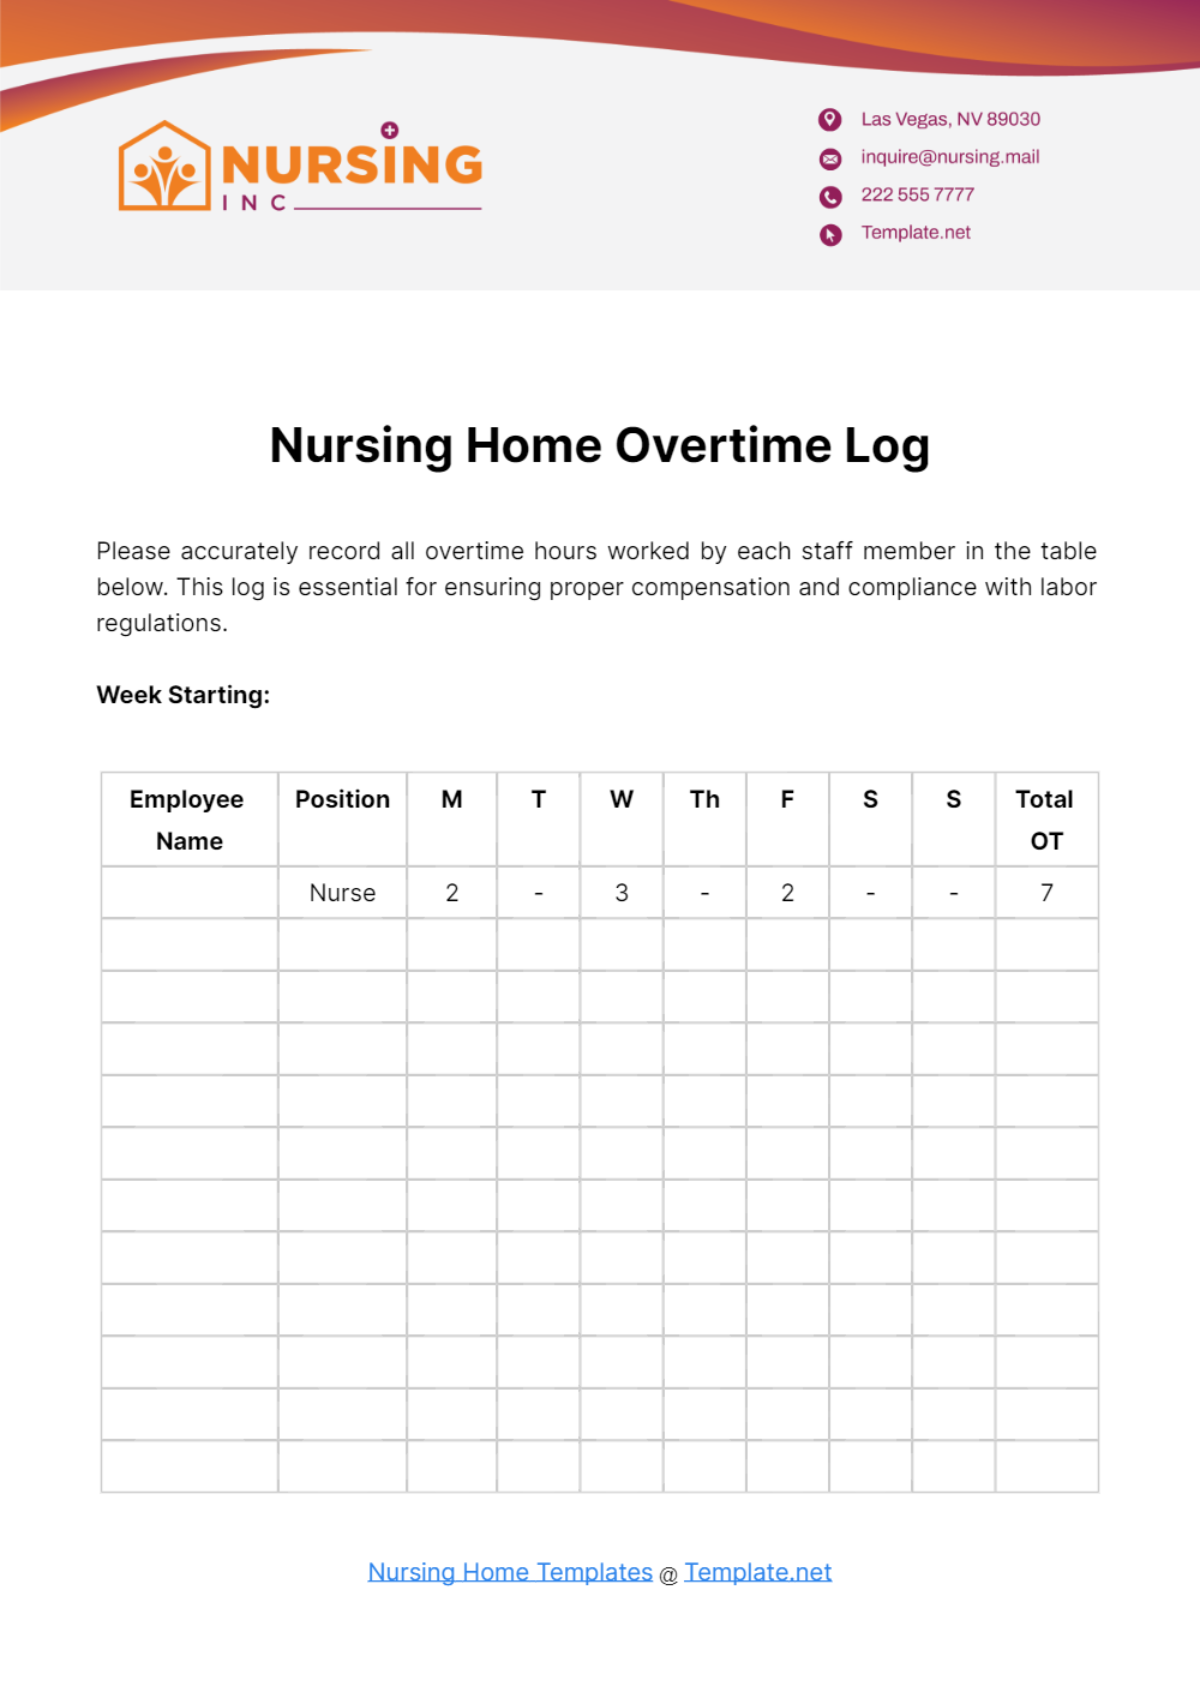 Nursing Home Overtime Log Template